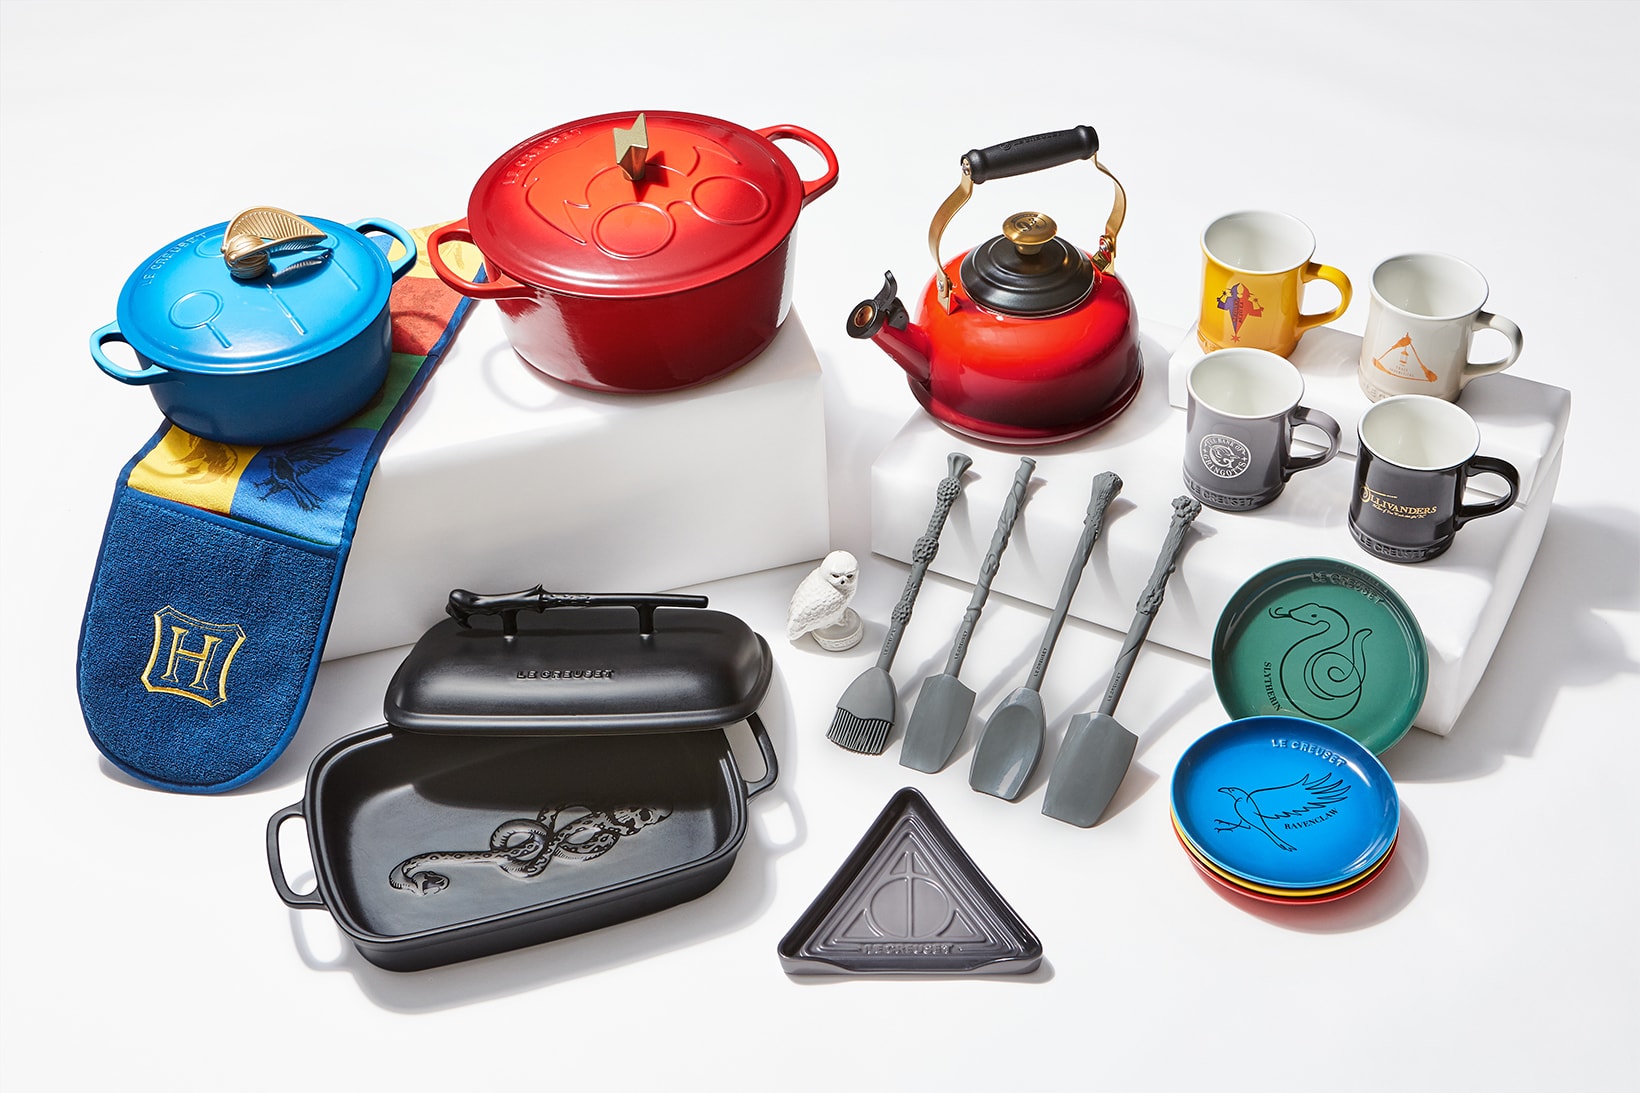 Le Creuset Harry Potter Kitchenware Collaboration Collection dutch oven pots spatulas mugs plates kettle